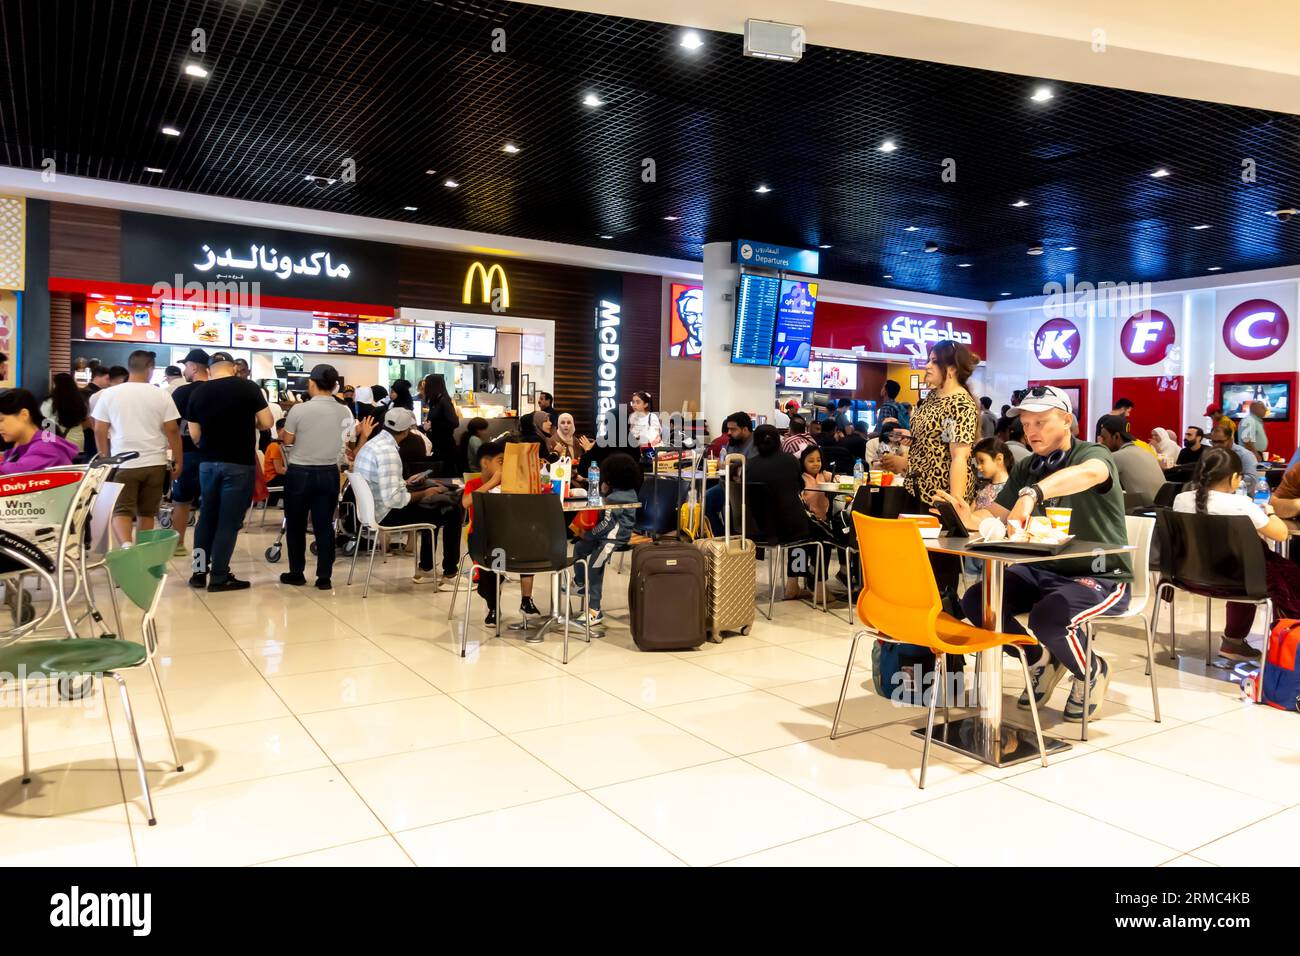 McDonalds Dubai airport cafe. KFC restaurant dubai airport. Food court airport Dubai Stock Photo